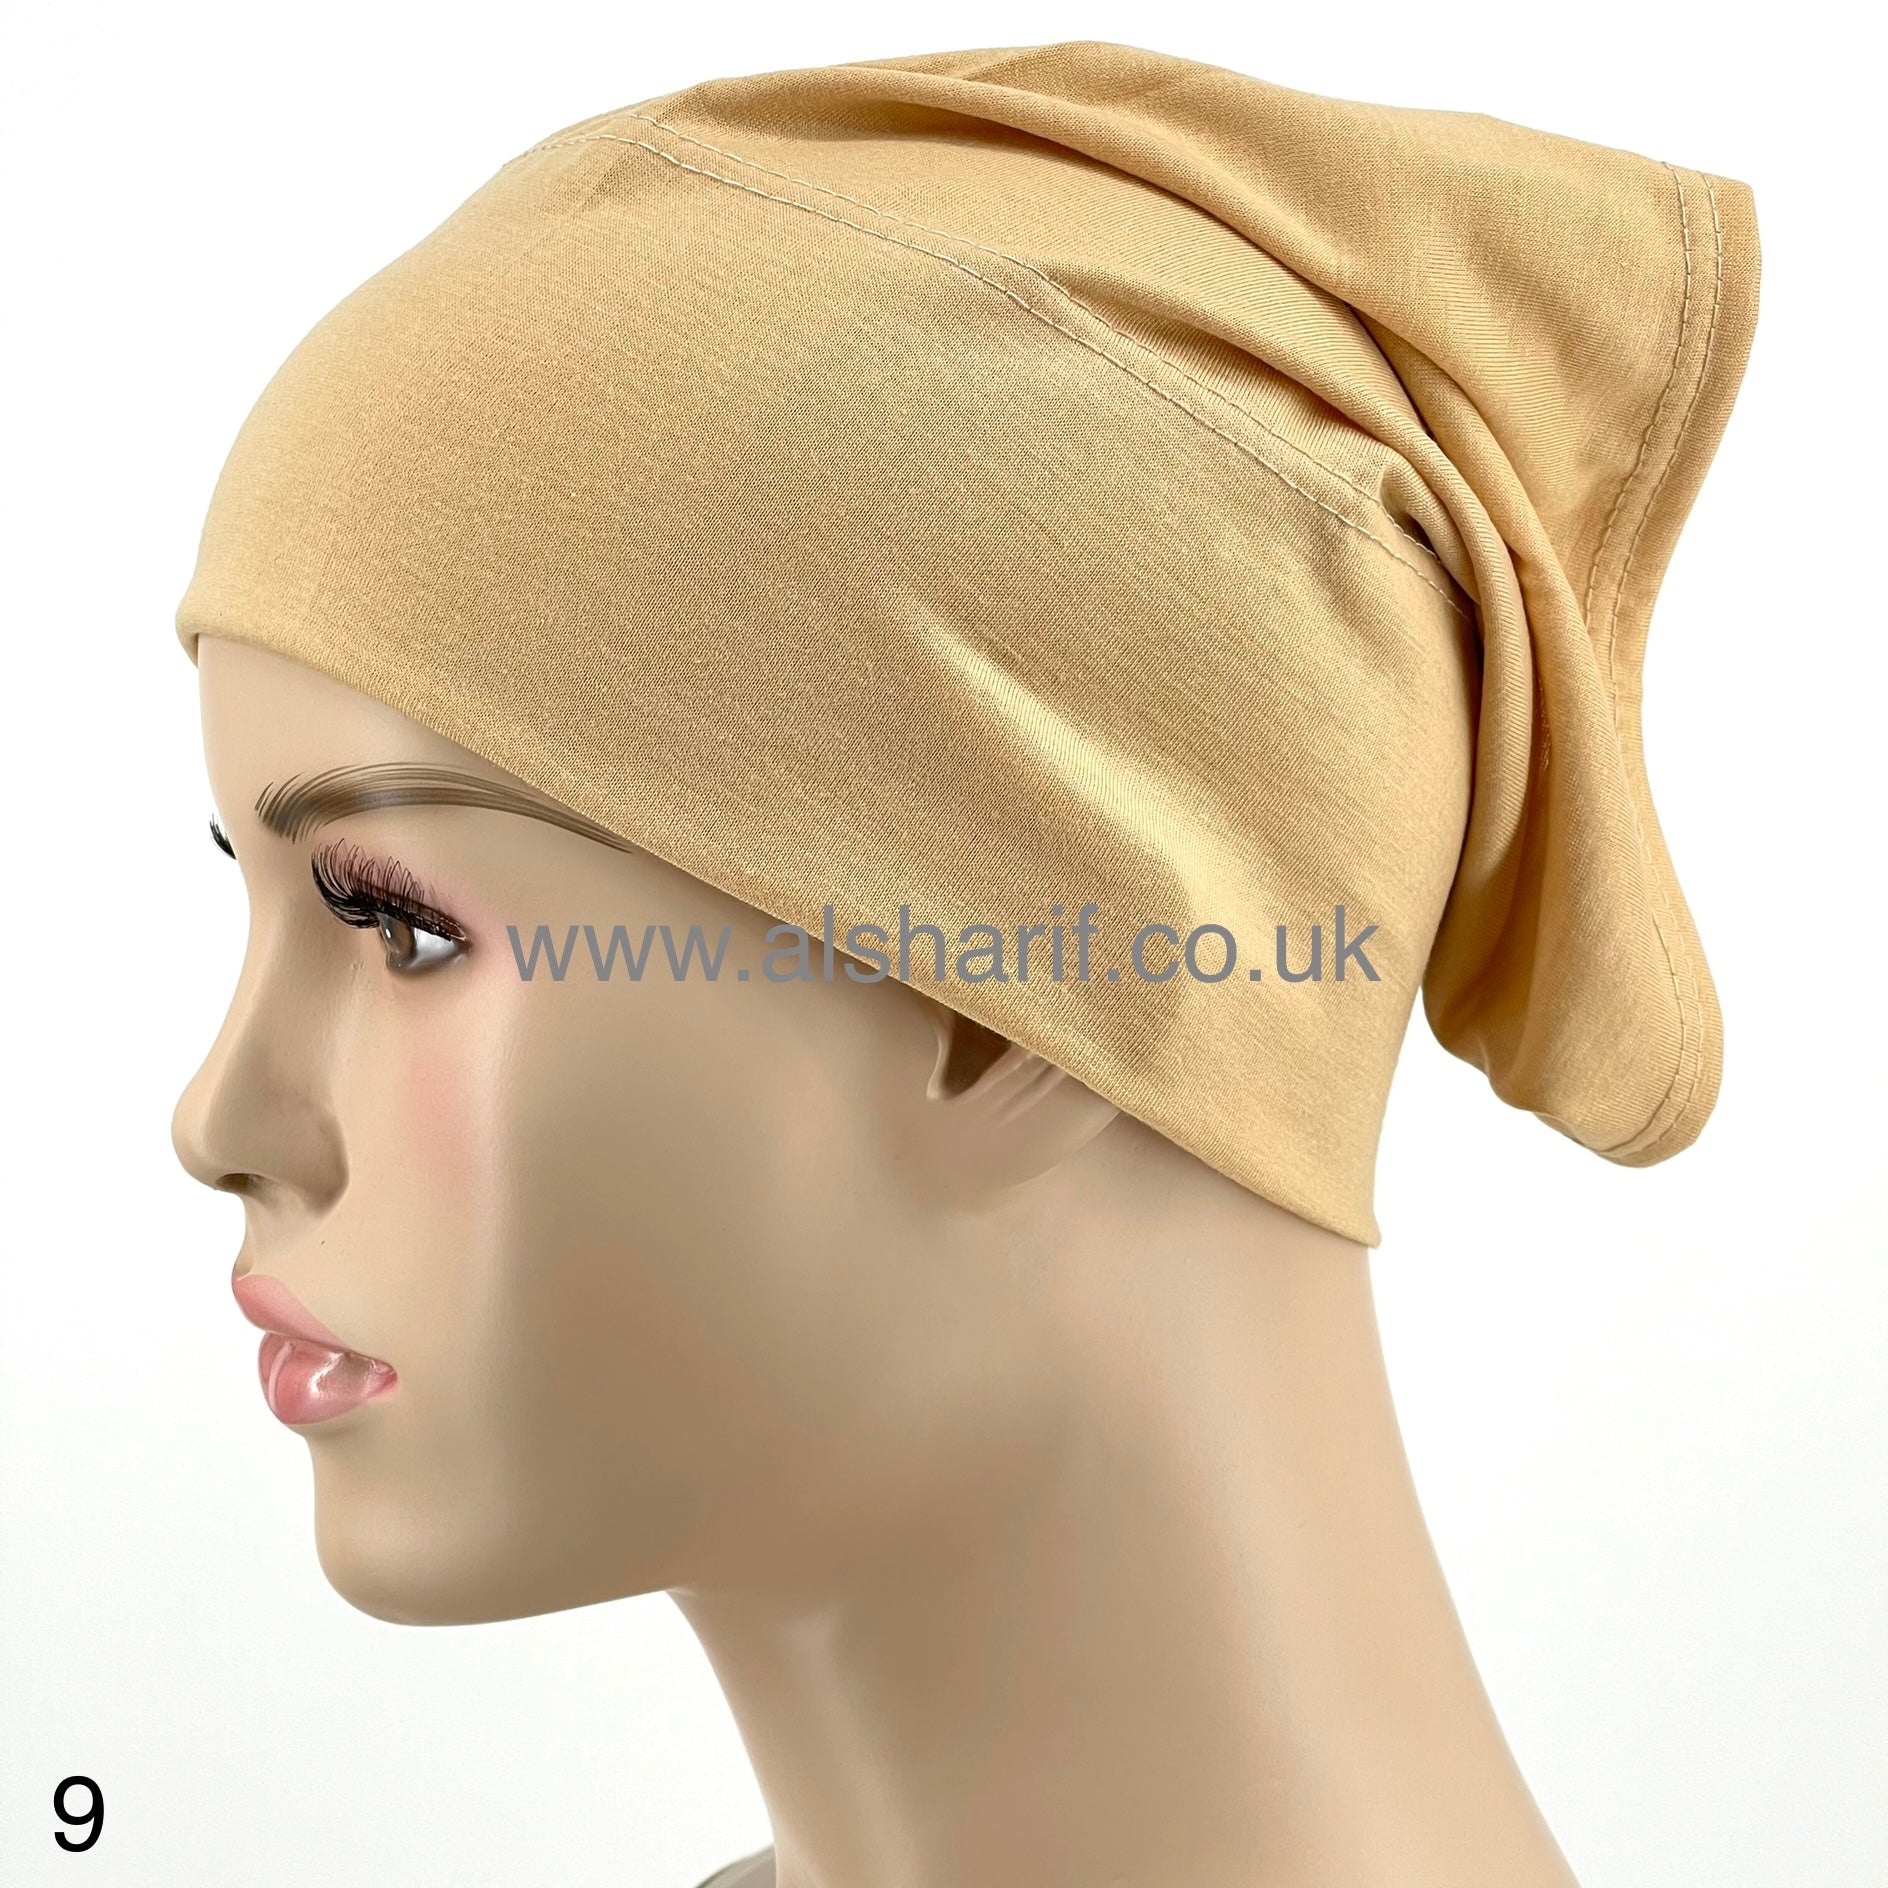 Under Hijab Tube Bonnet Cap #9